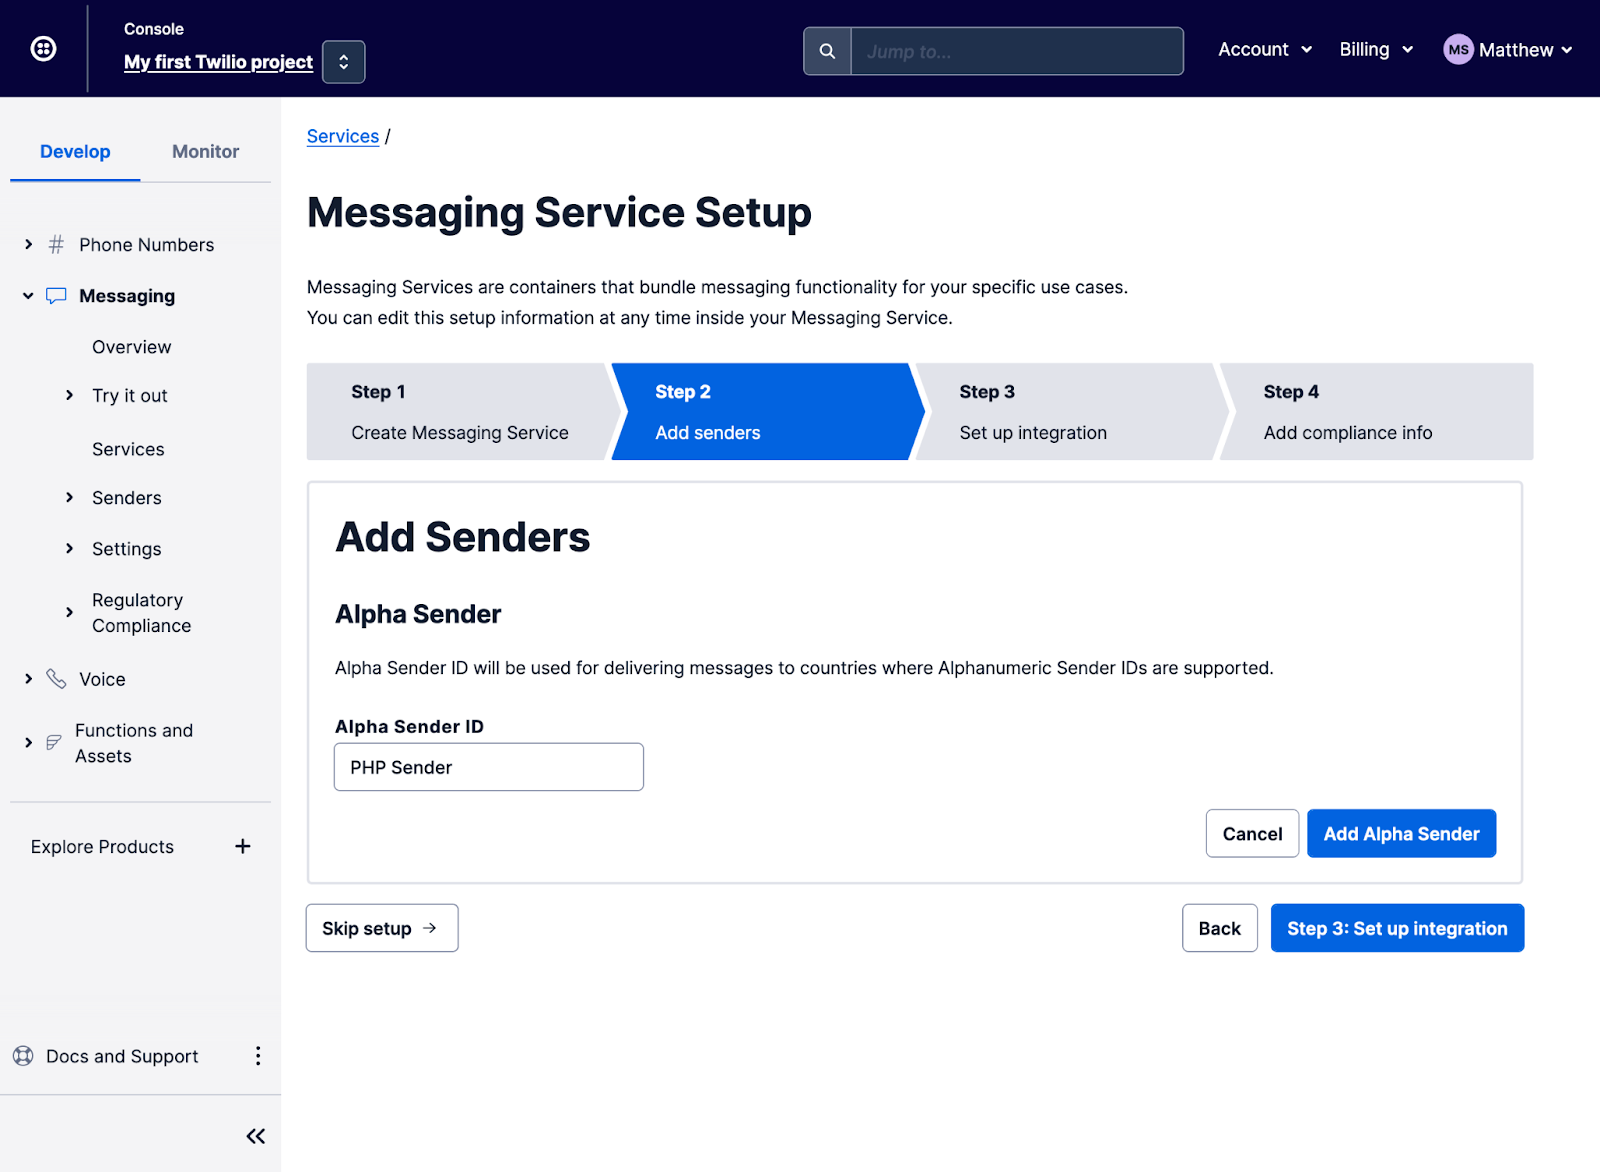 Messaging Service Setup - Step 2: Add Senders.